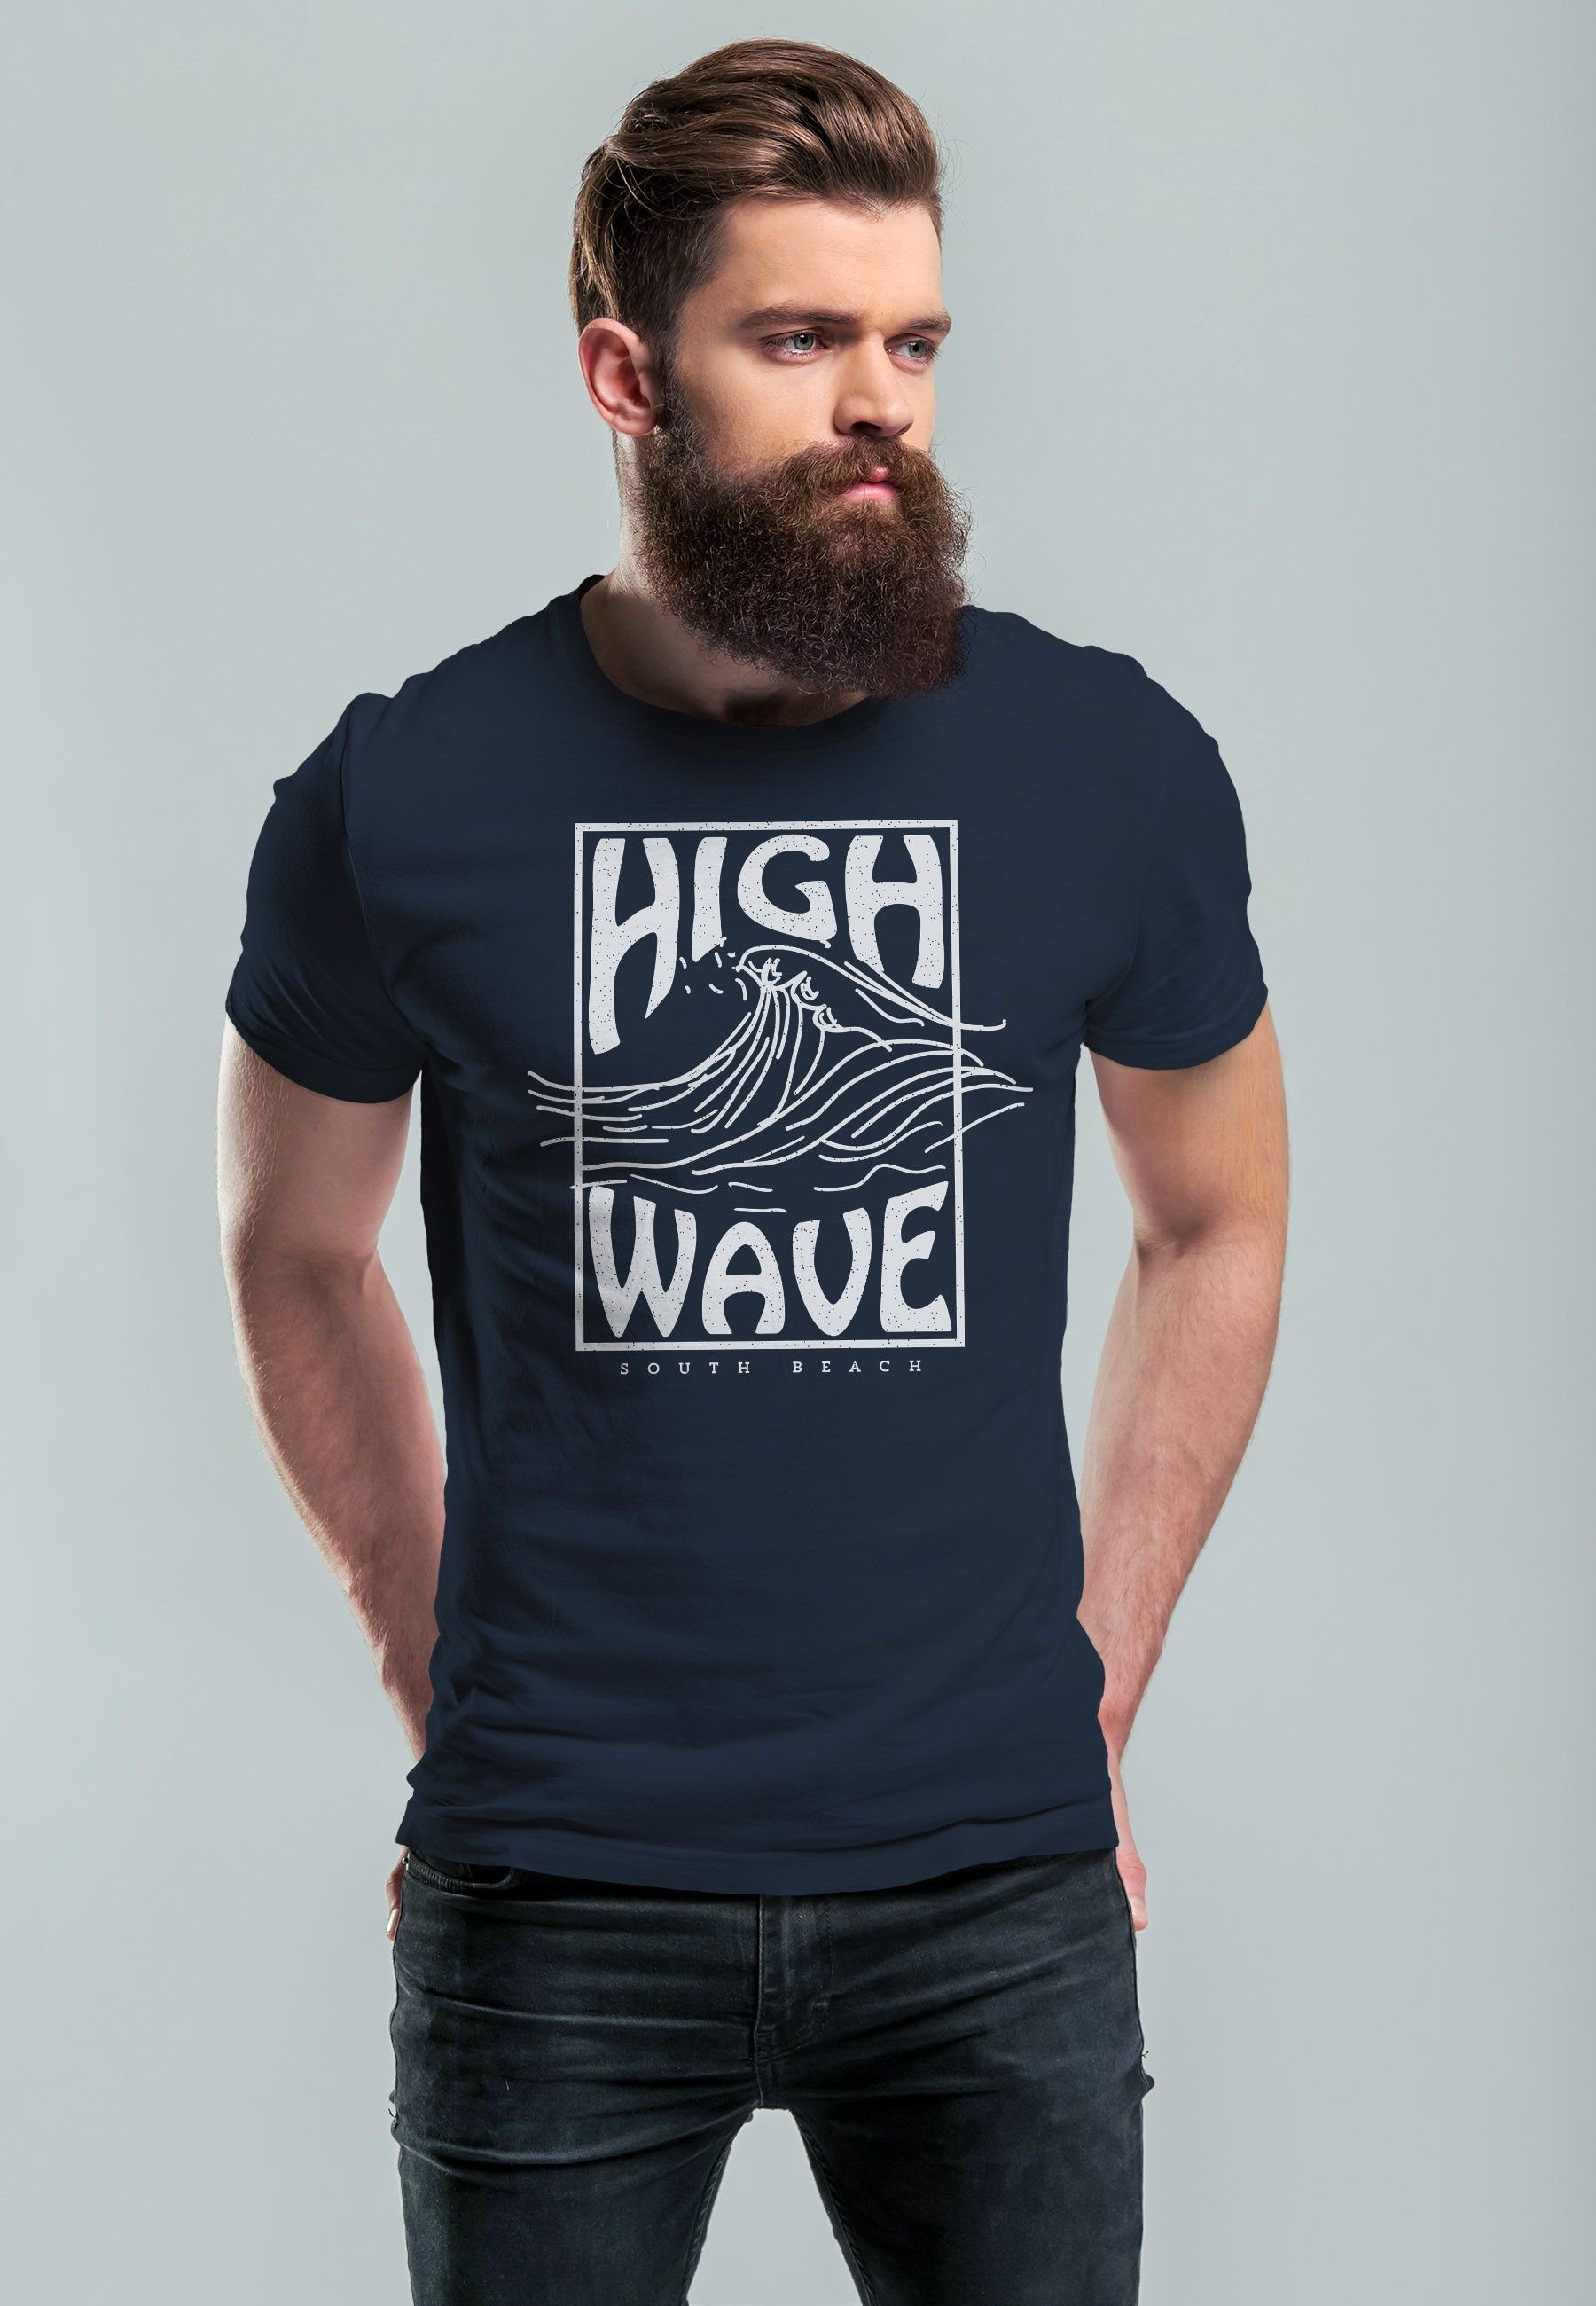 Print High Aufdruck navy Line Art Logo mit Print-Shirt Surfing T-Shirt Herren Welle Wave Neverless Schrift